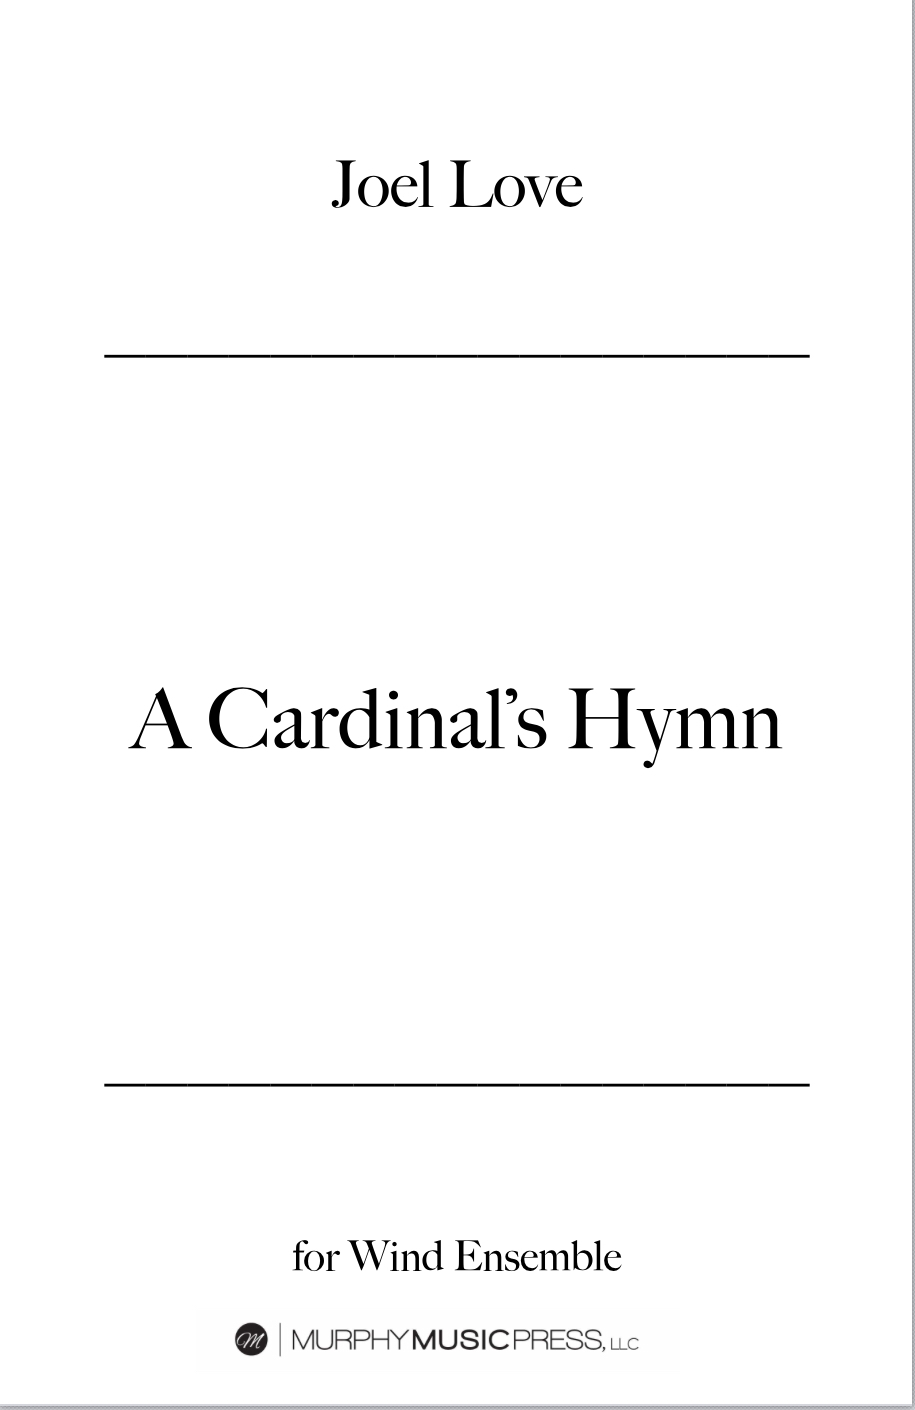 A Cardinals Hymn  by Joel Love